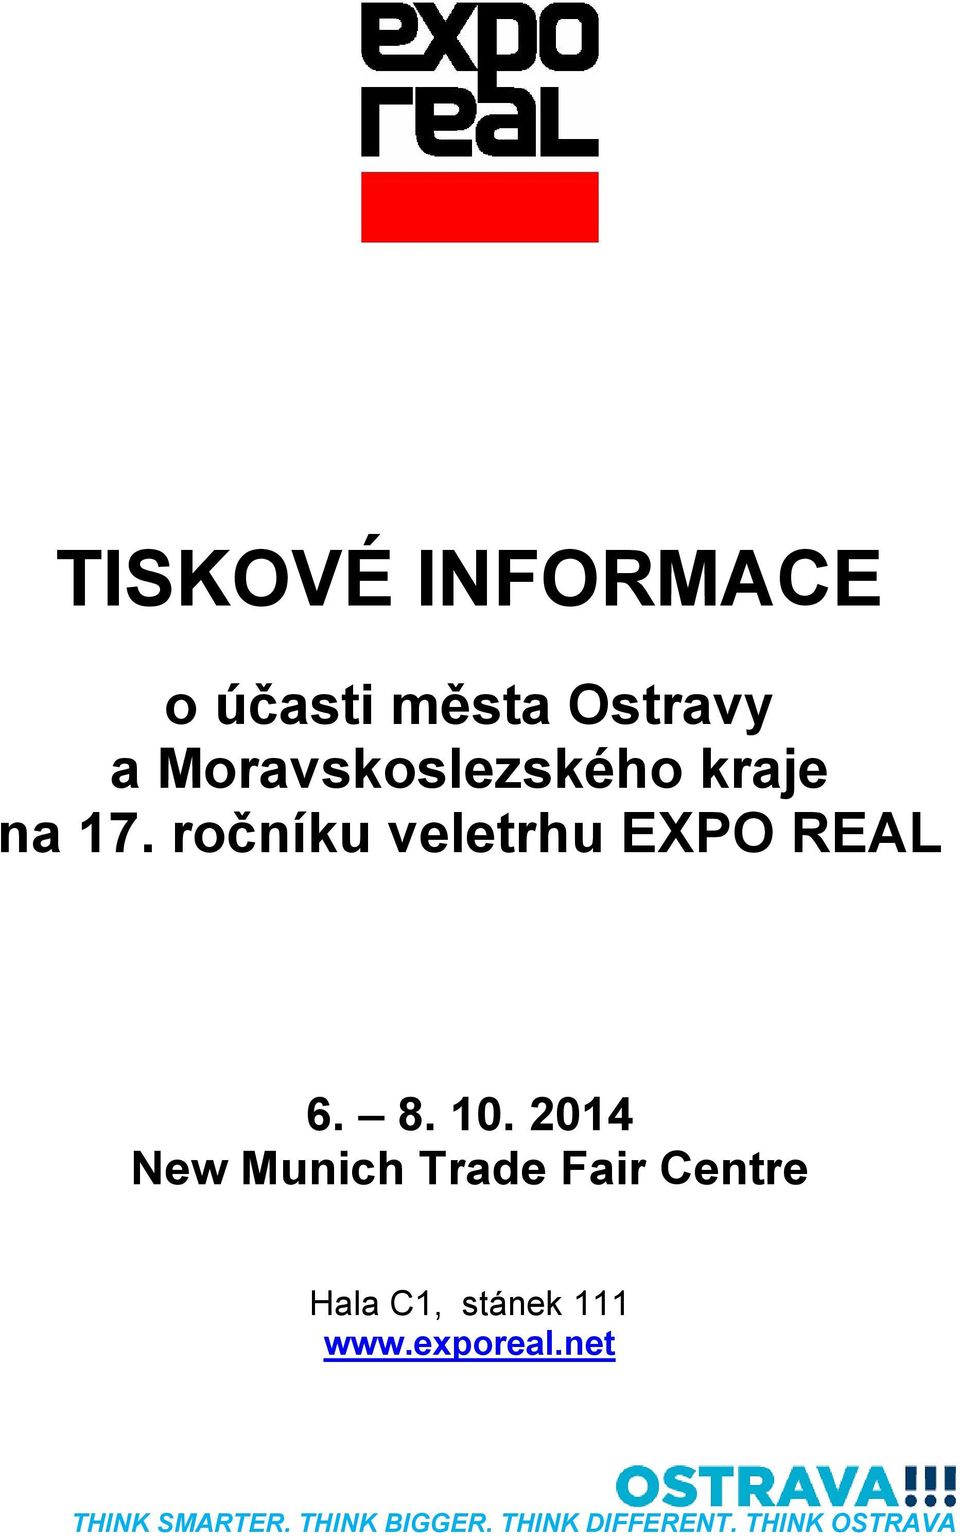 2014 New Munich Trade Fair Centre Hala C1, stánek 111 www.